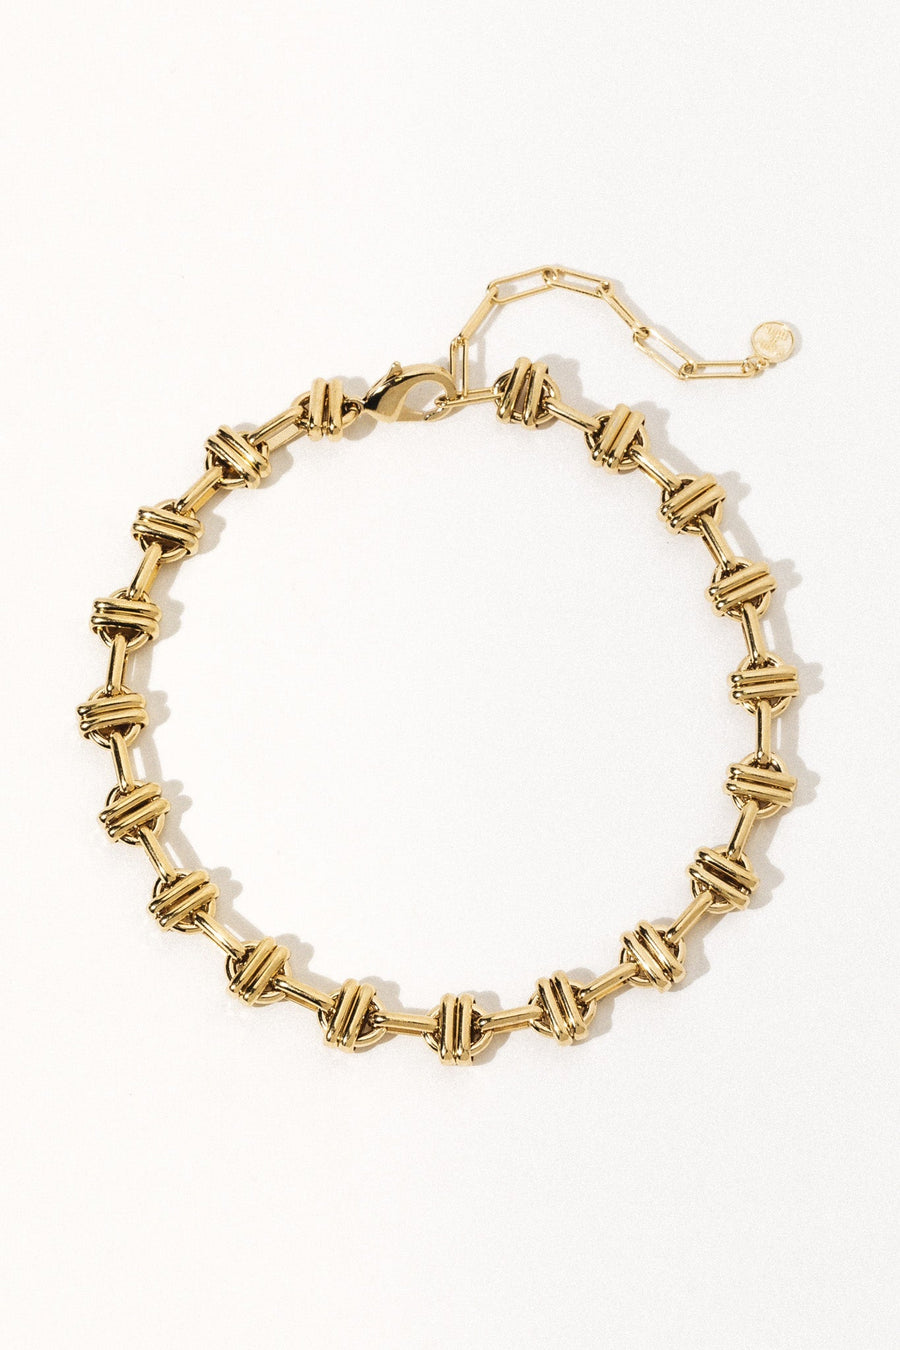 Goddess Jewelry Gold / 12 Inches Serket Goddess Choker